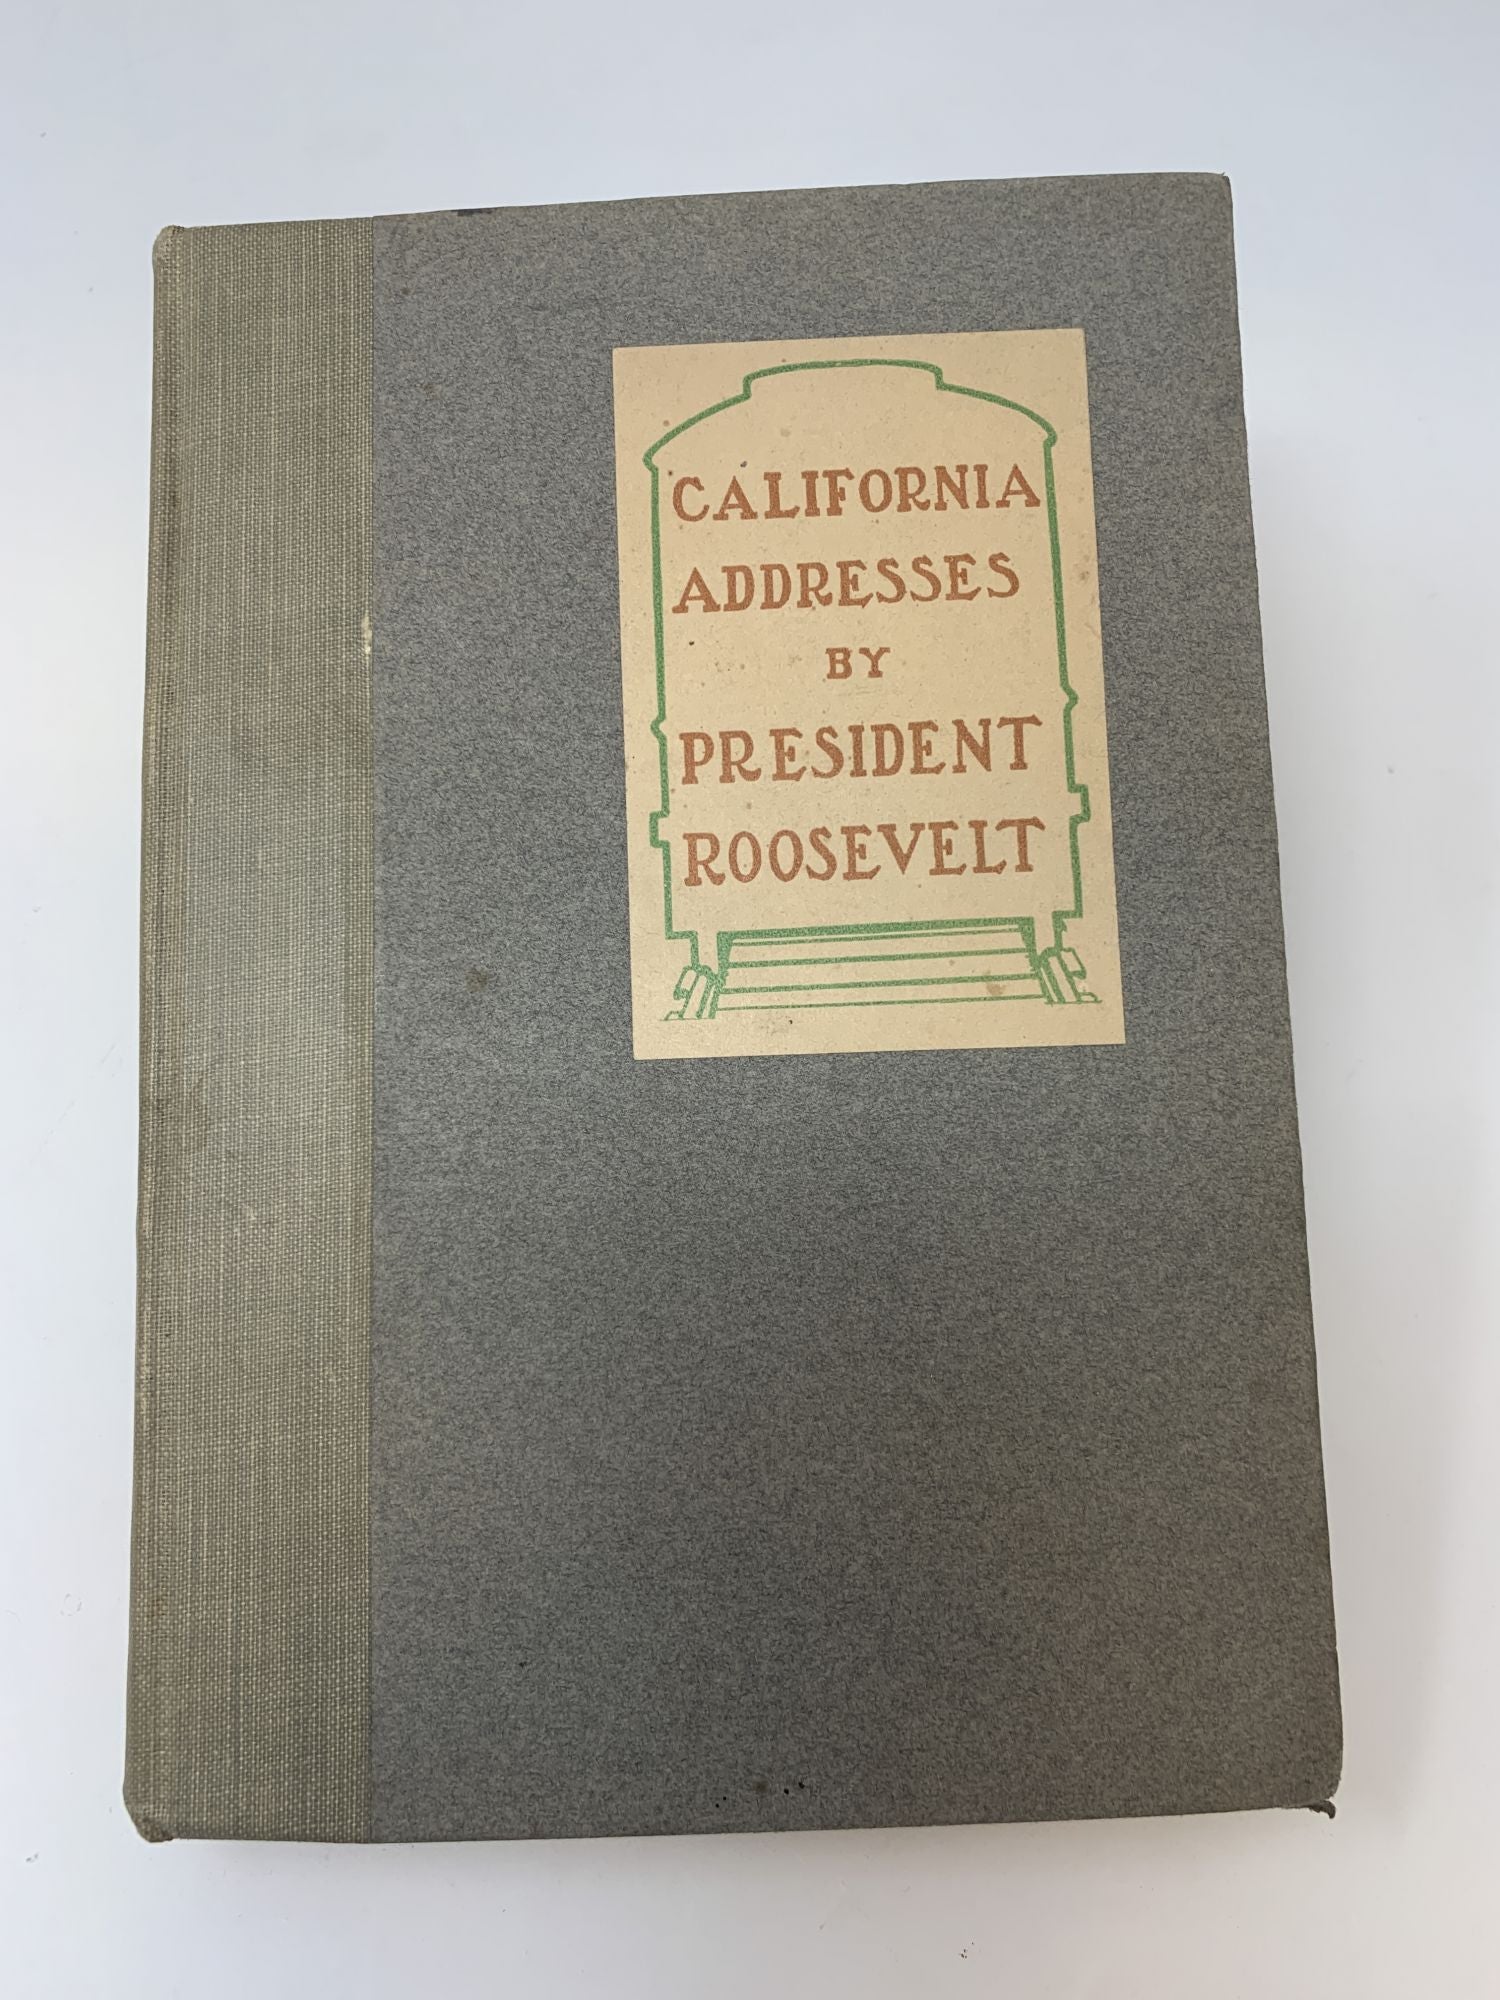 Roosevelt, Theodore - California Addresses by President Roosevelt